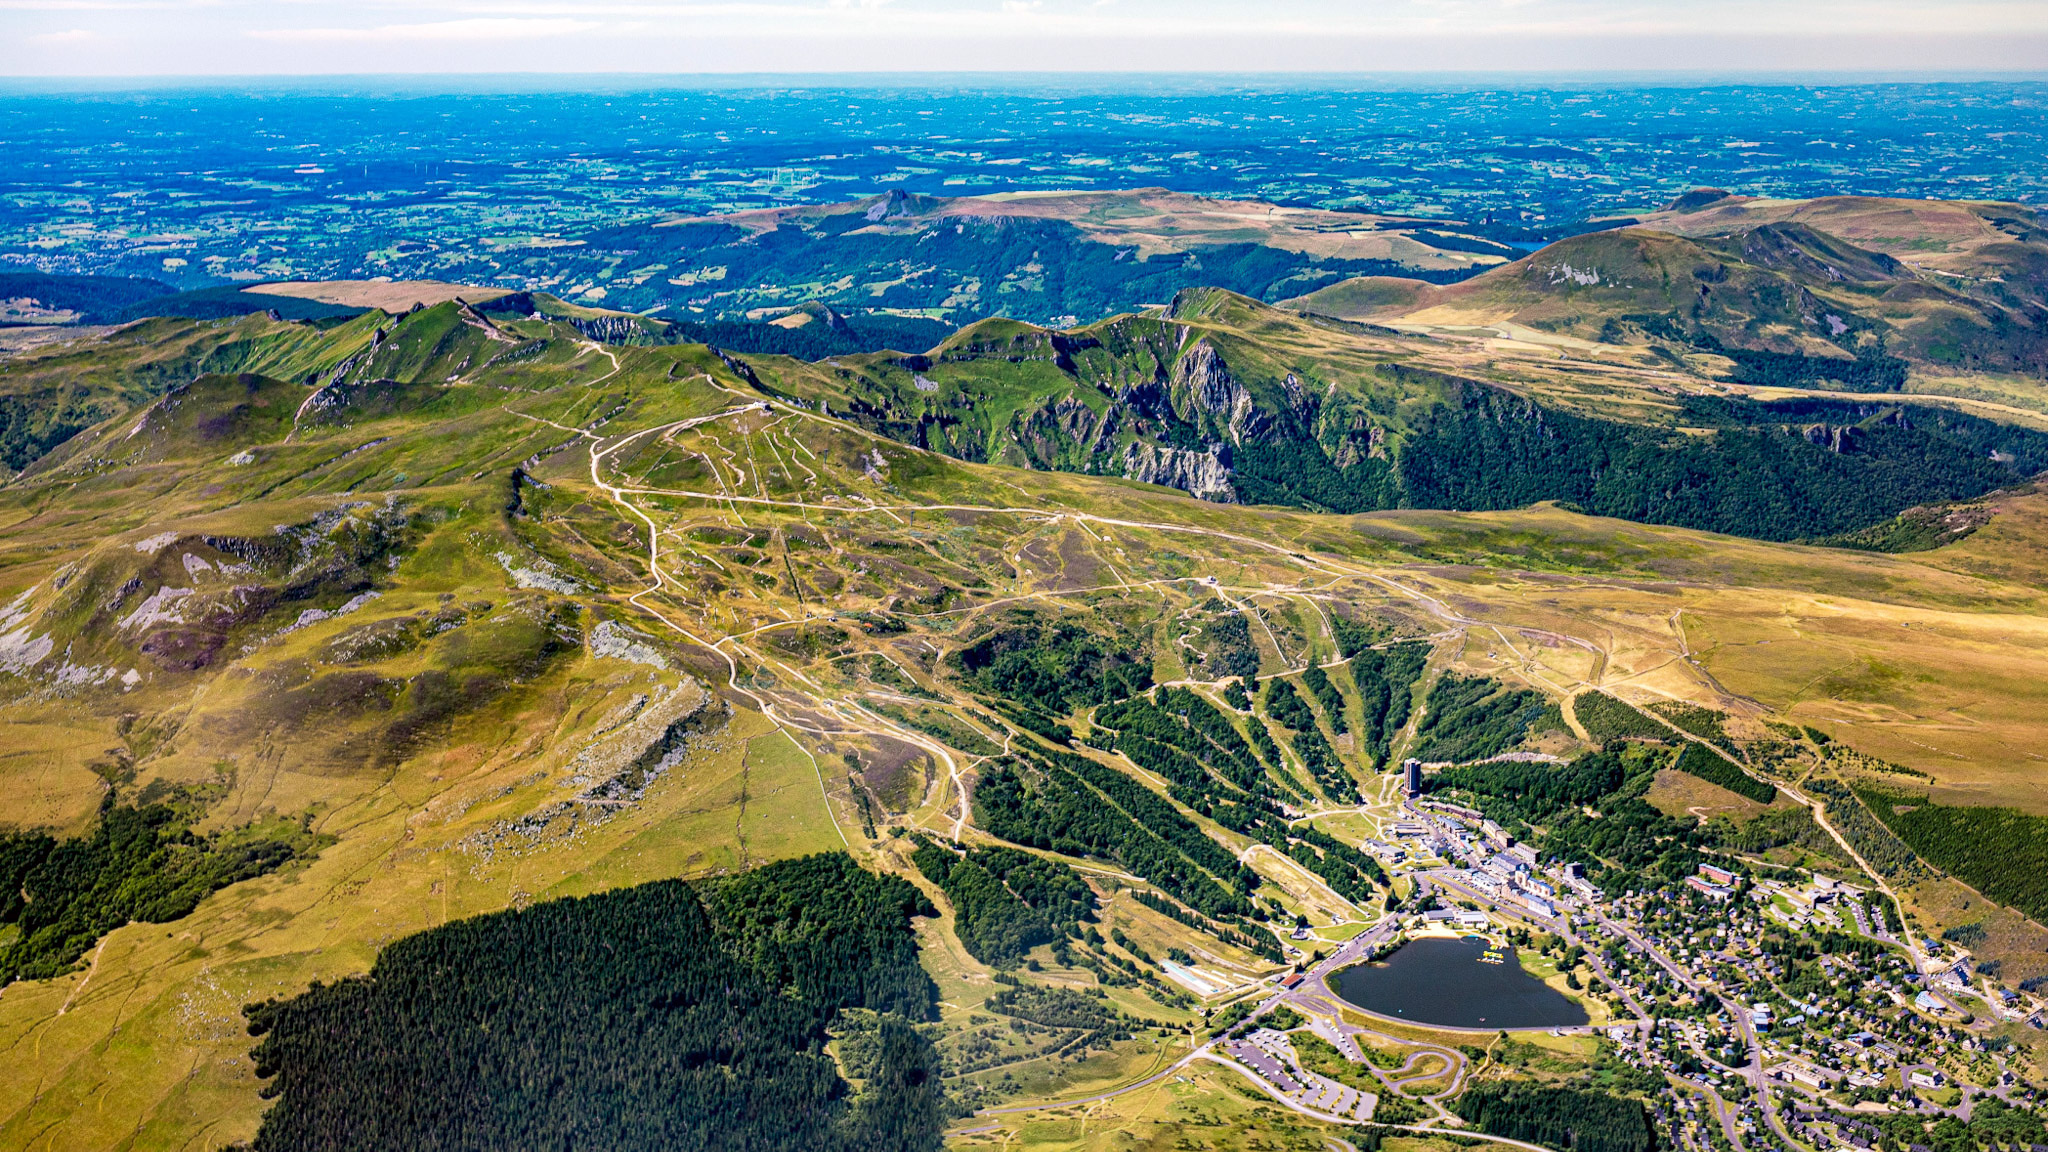 From Super Besse to Puy de Sancy, view of the Chaudefour Valley, Puy Ferrand and Puy de Sancy